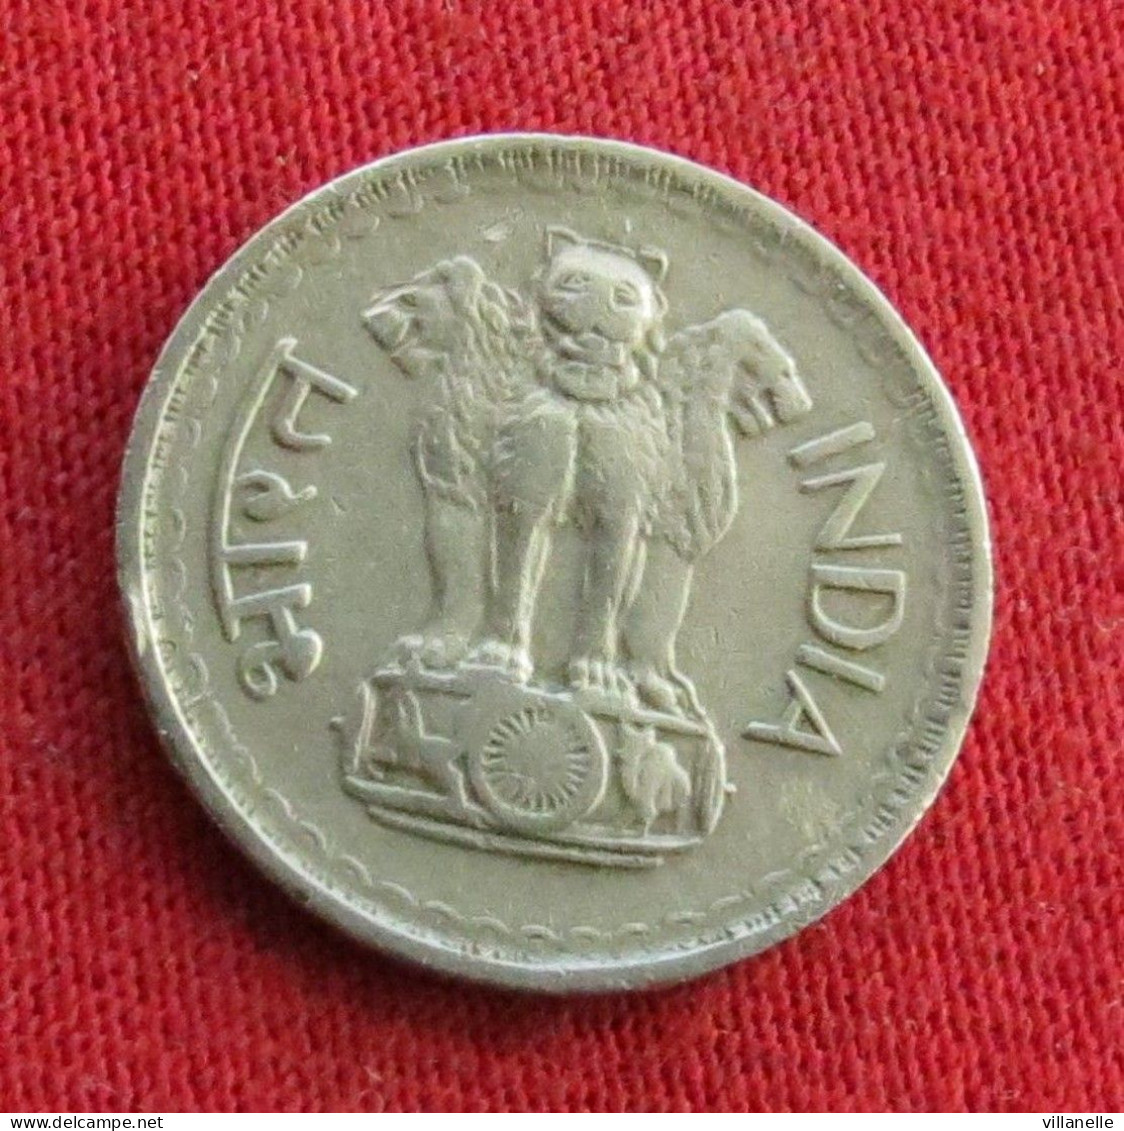 India 25 Paise 1972 C KM# 49 *VT Calcutta Mint  Inde Indien Indies Indie - Inde